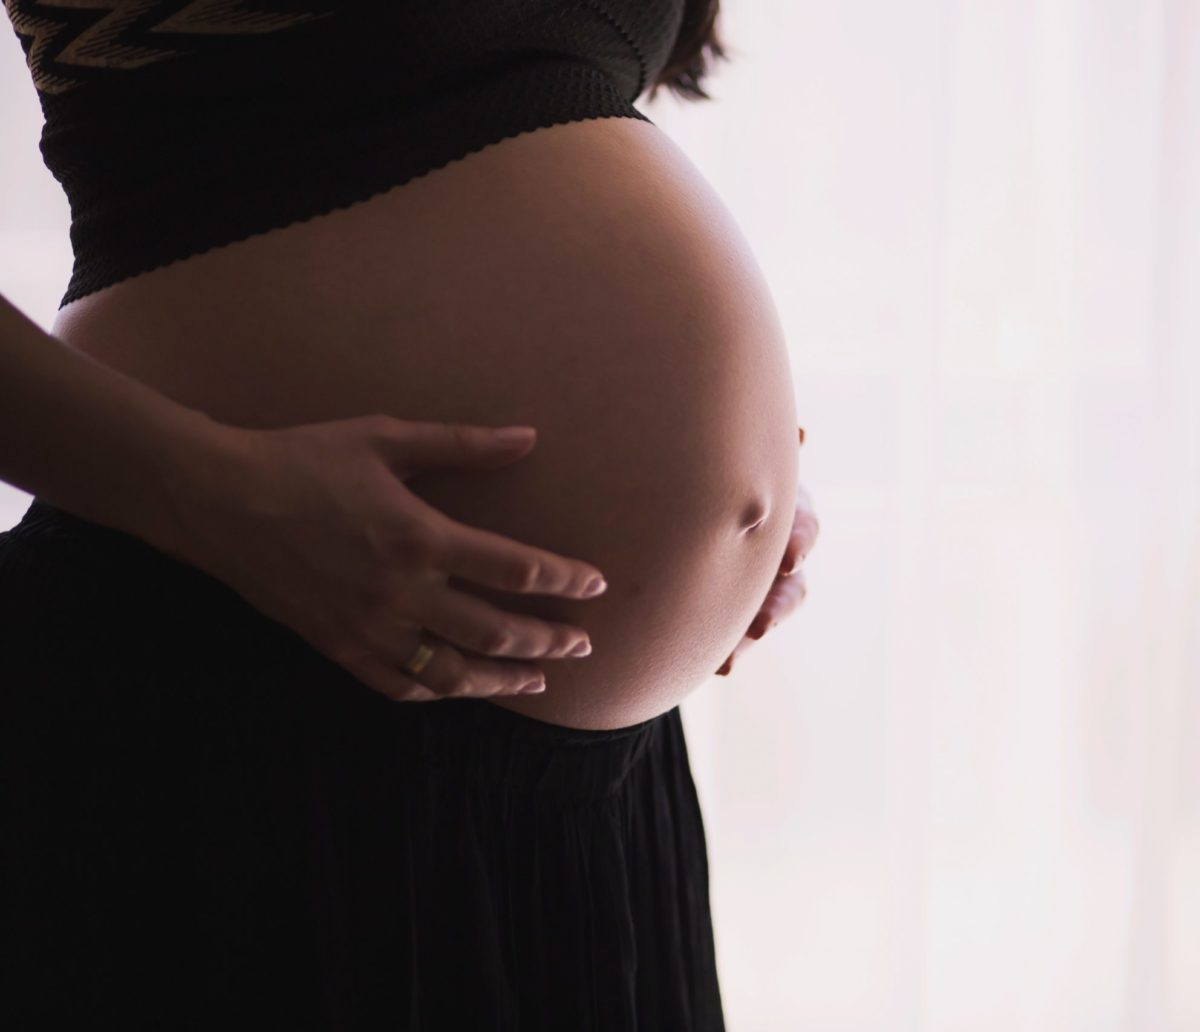 Pregnancy skincare Ποιες καλλυντικές ουσίες πρέπει να αποφεύγονται κατά τη διάρκεια της εγκυμοσύνης